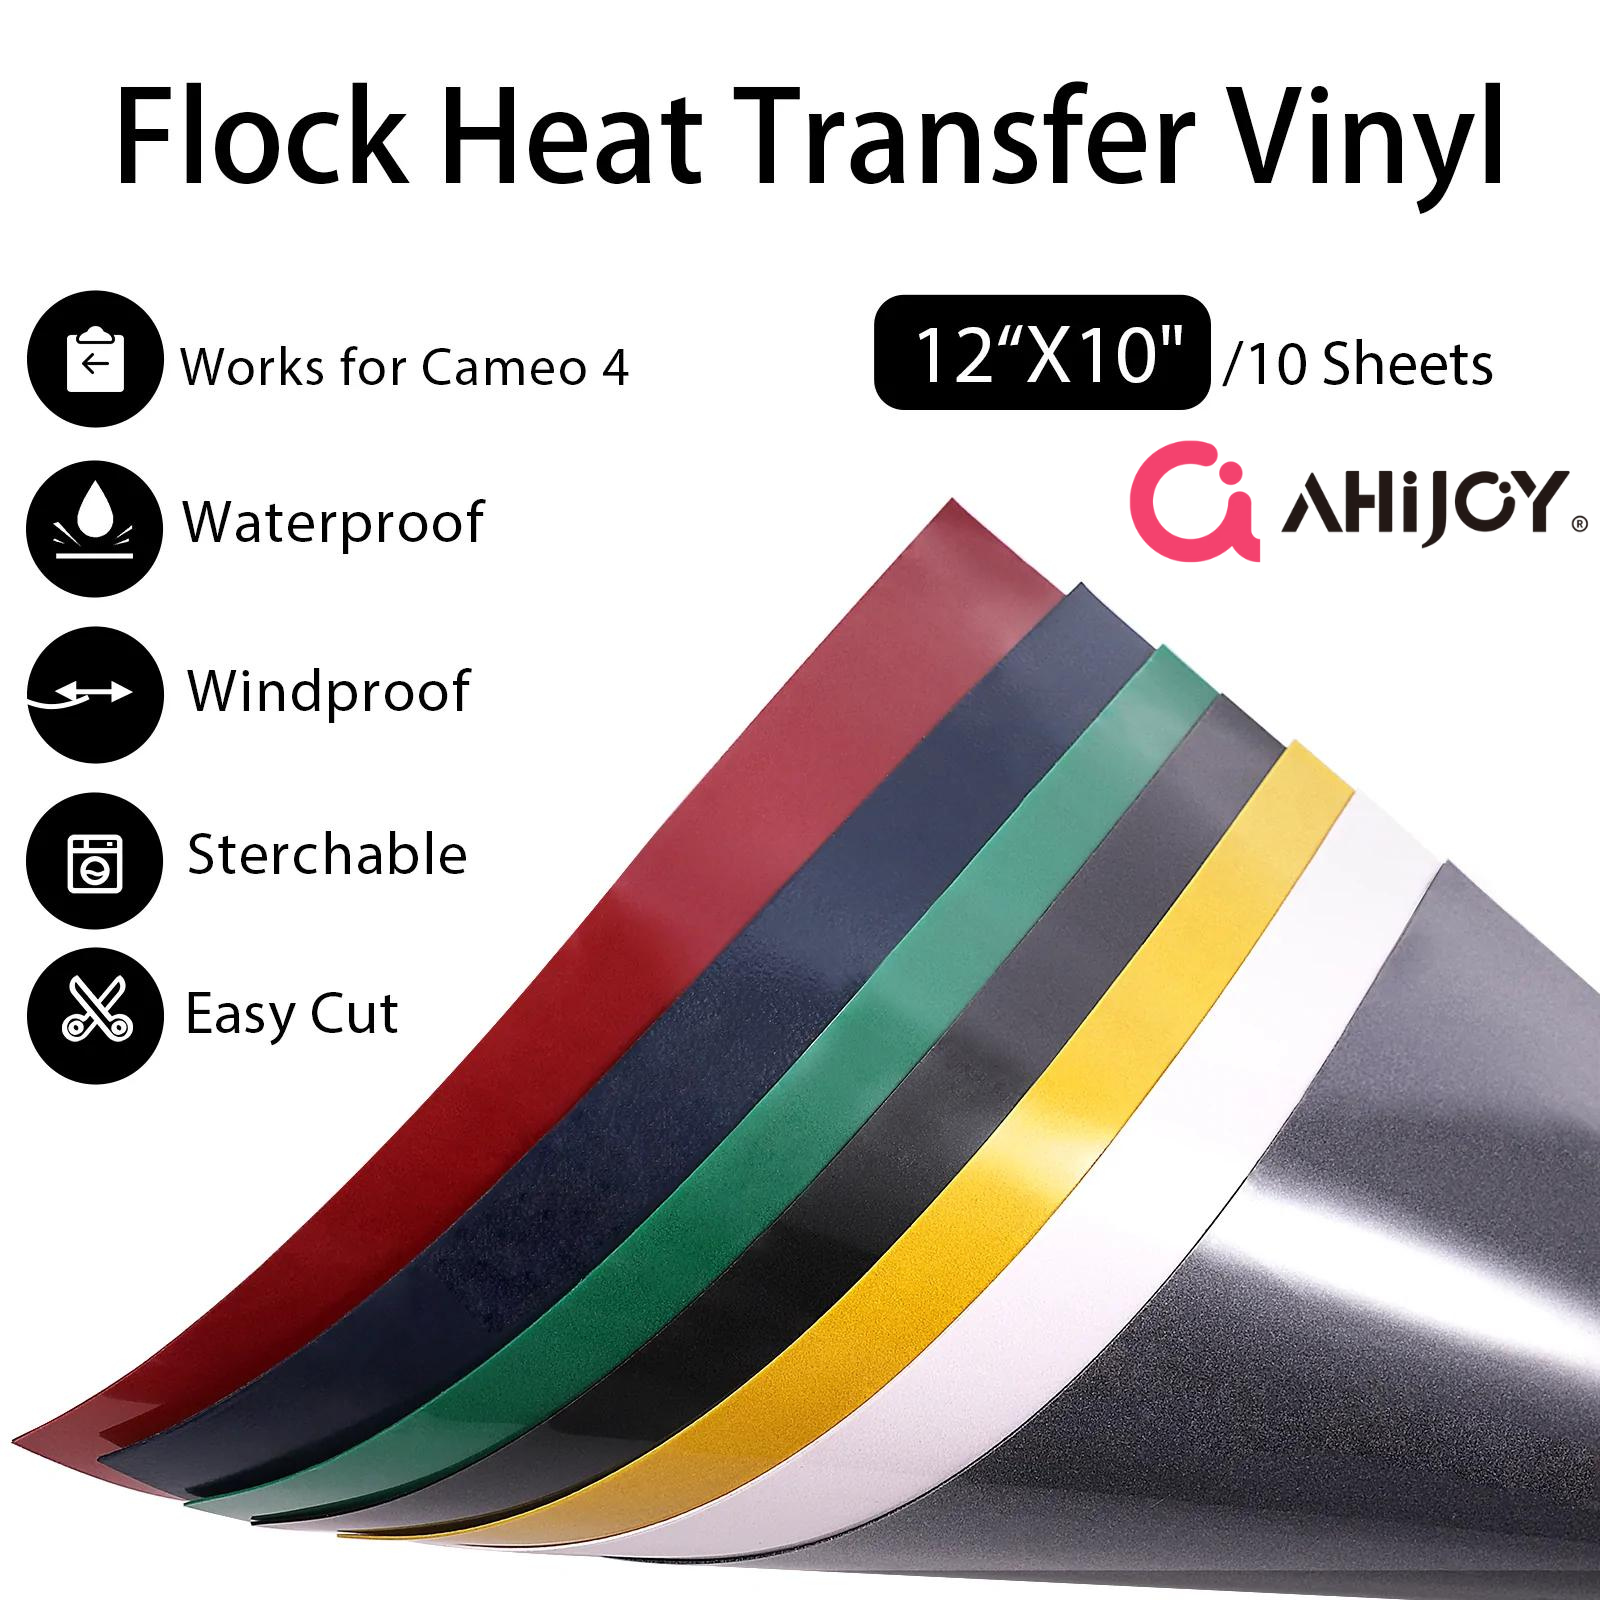 Where To Buy Heat Transfer Vinyl?